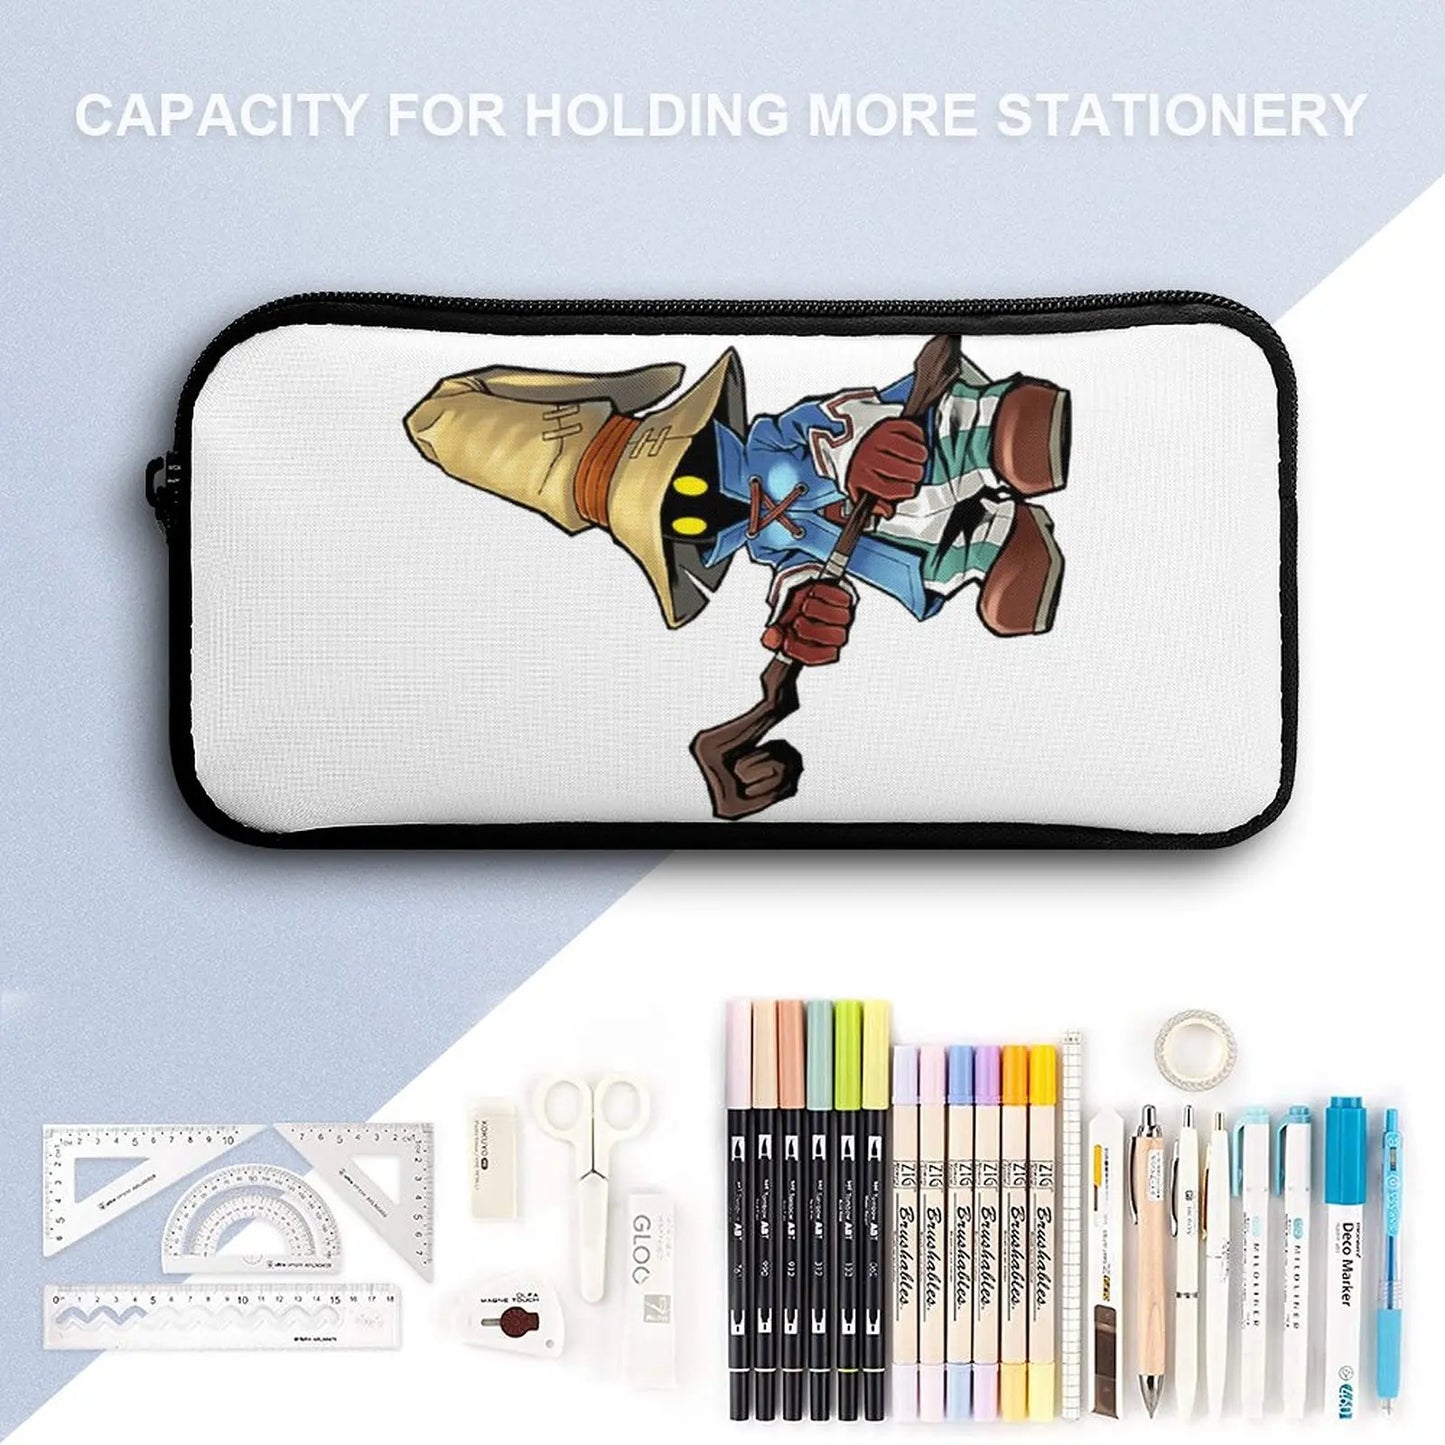 Final Fantasy For Sale 3 in 1 Set 17 Inch Backpack Lunch Bag Pen Bag  Travel Graphic Secure Knapsack Cosy